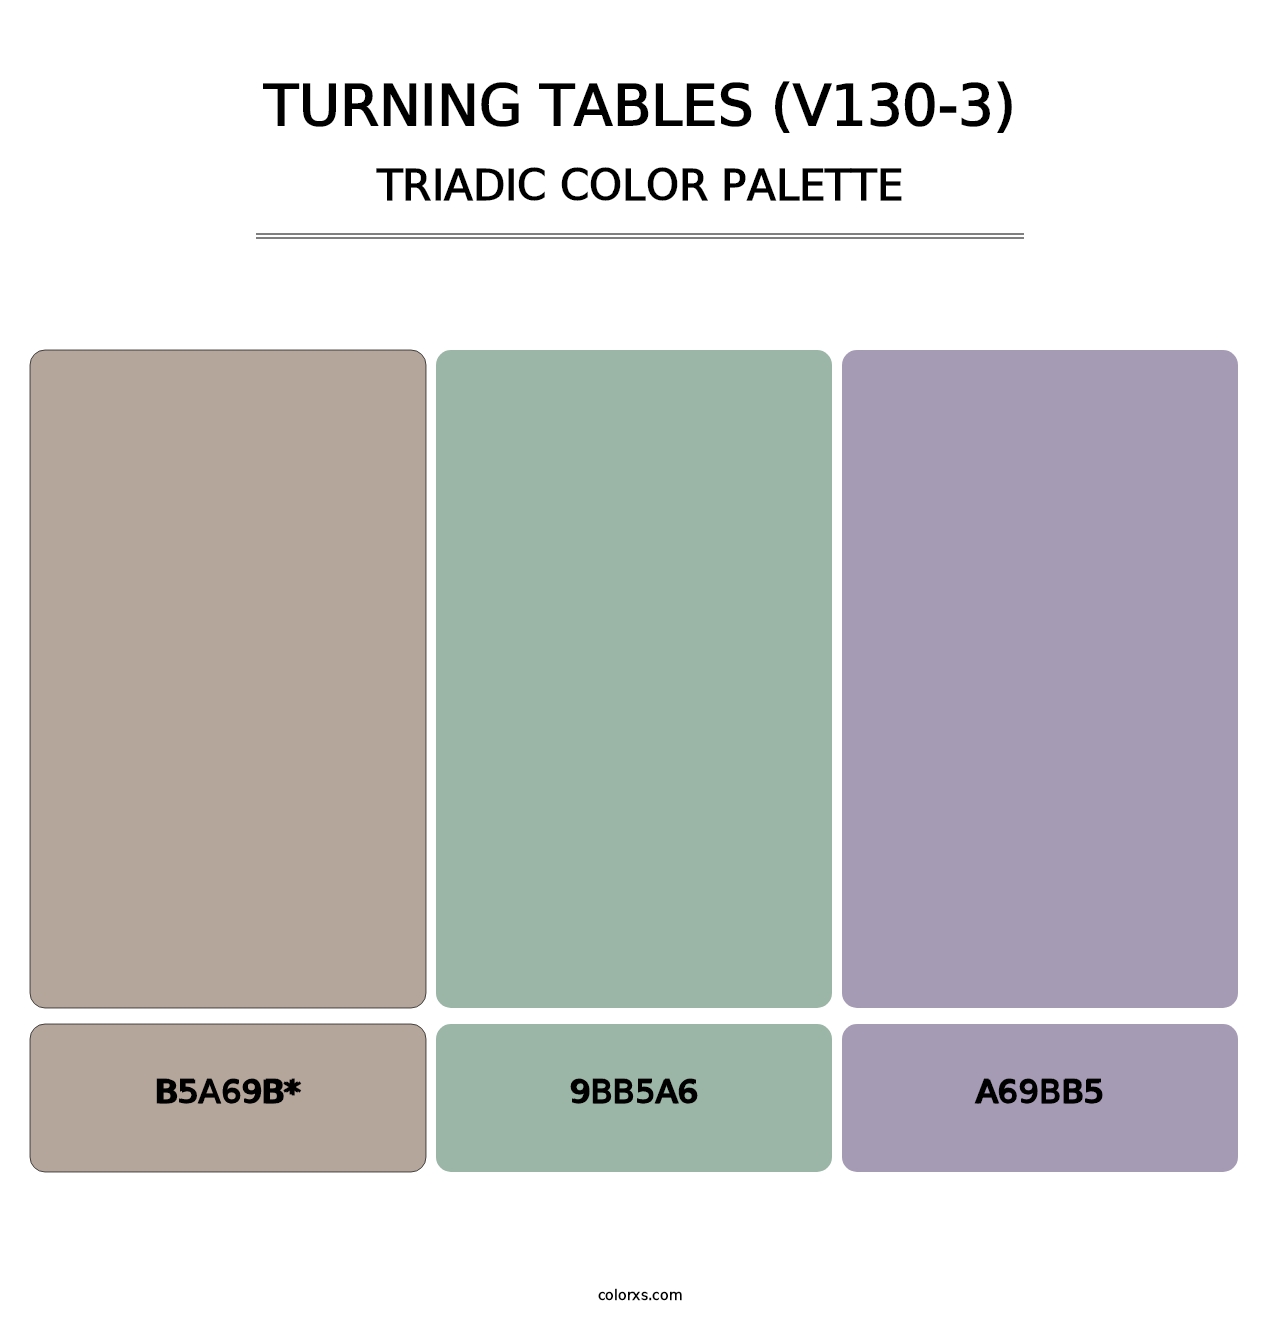 Turning Tables (V130-3) - Triadic Color Palette